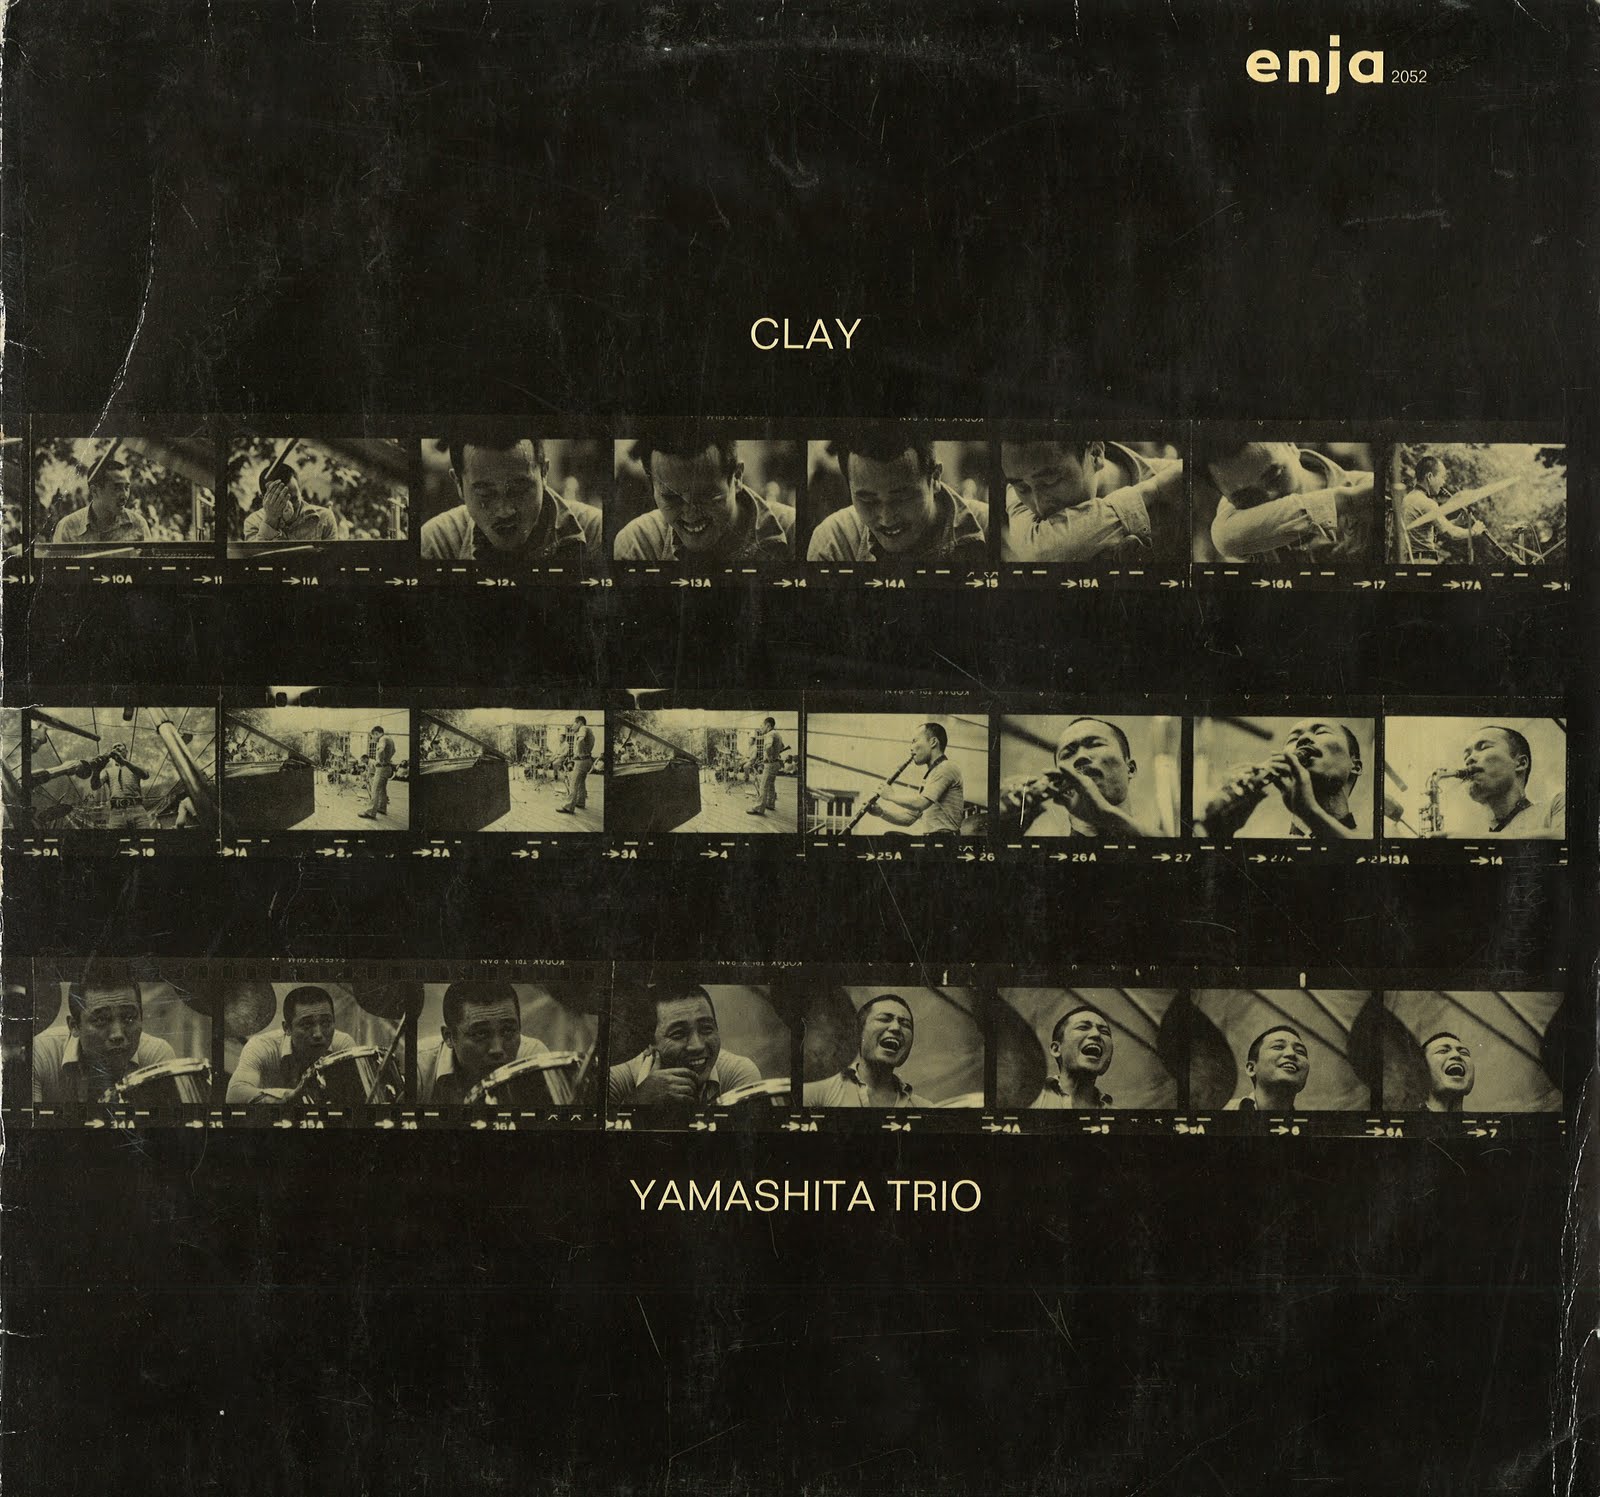 (Free Jazz) [CD] Yosuke Yamashita Trio - Chiasma - 1975 (2009 Japan Edition), FLAC (tracks